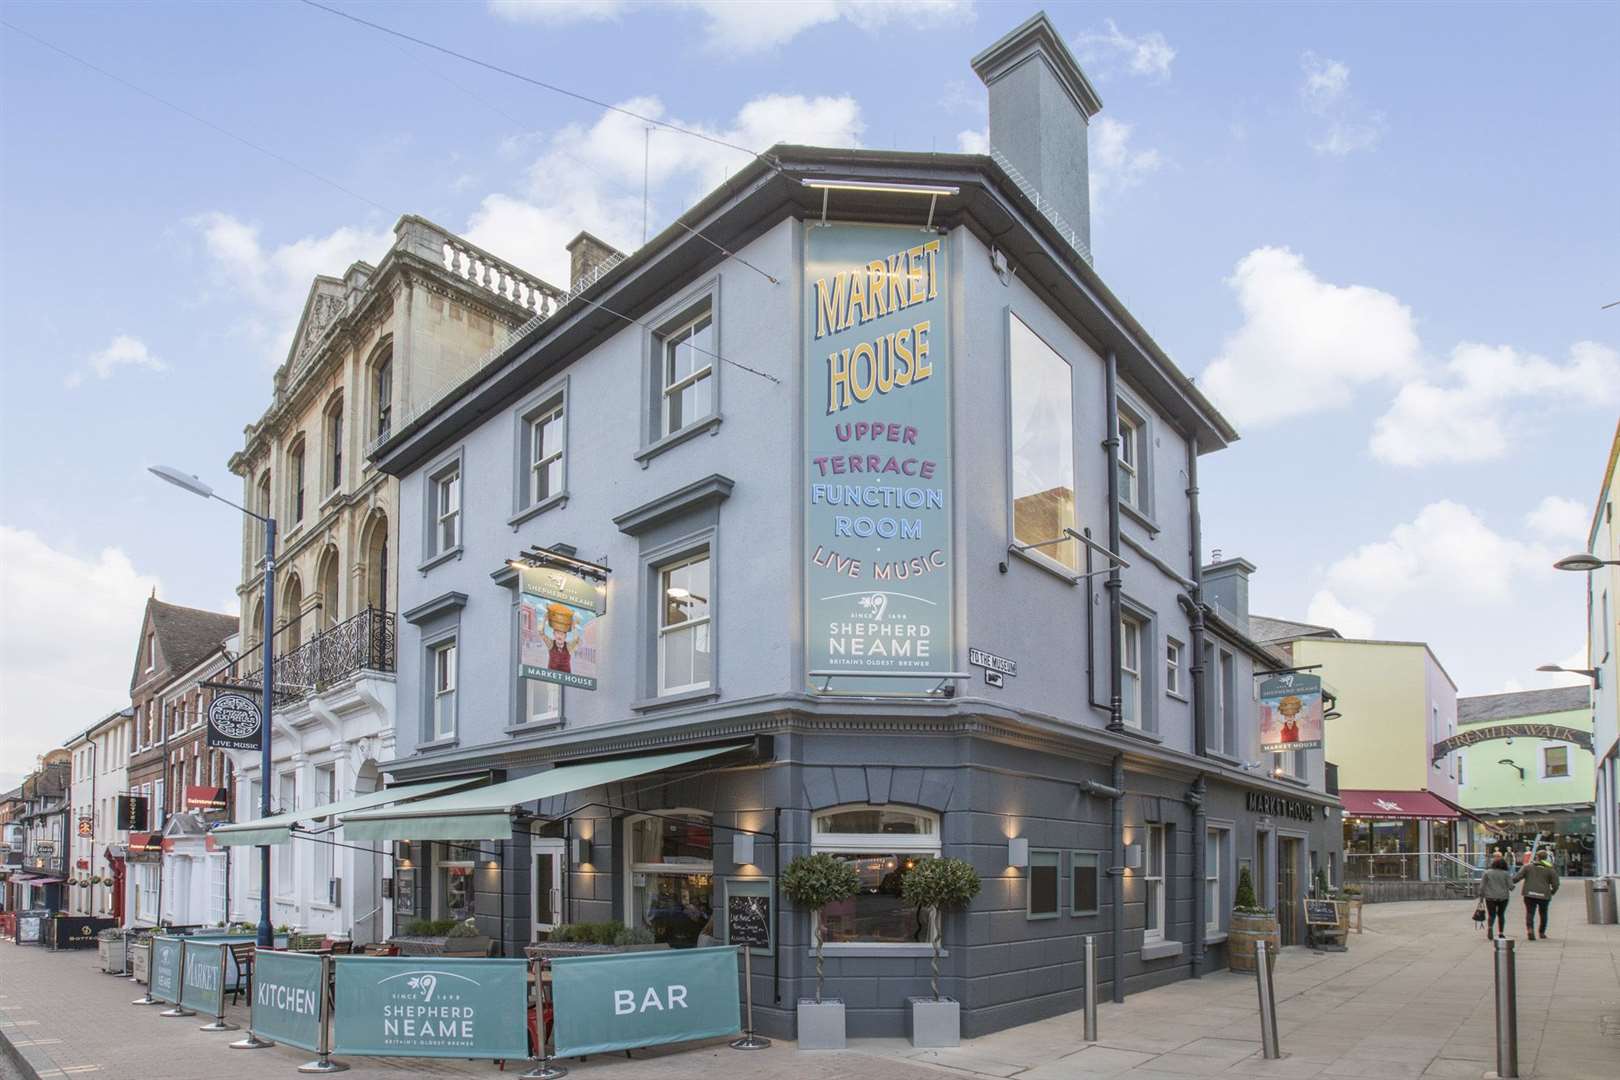 The Market House is an award-winning Shepherd Neame pub in Maidstone